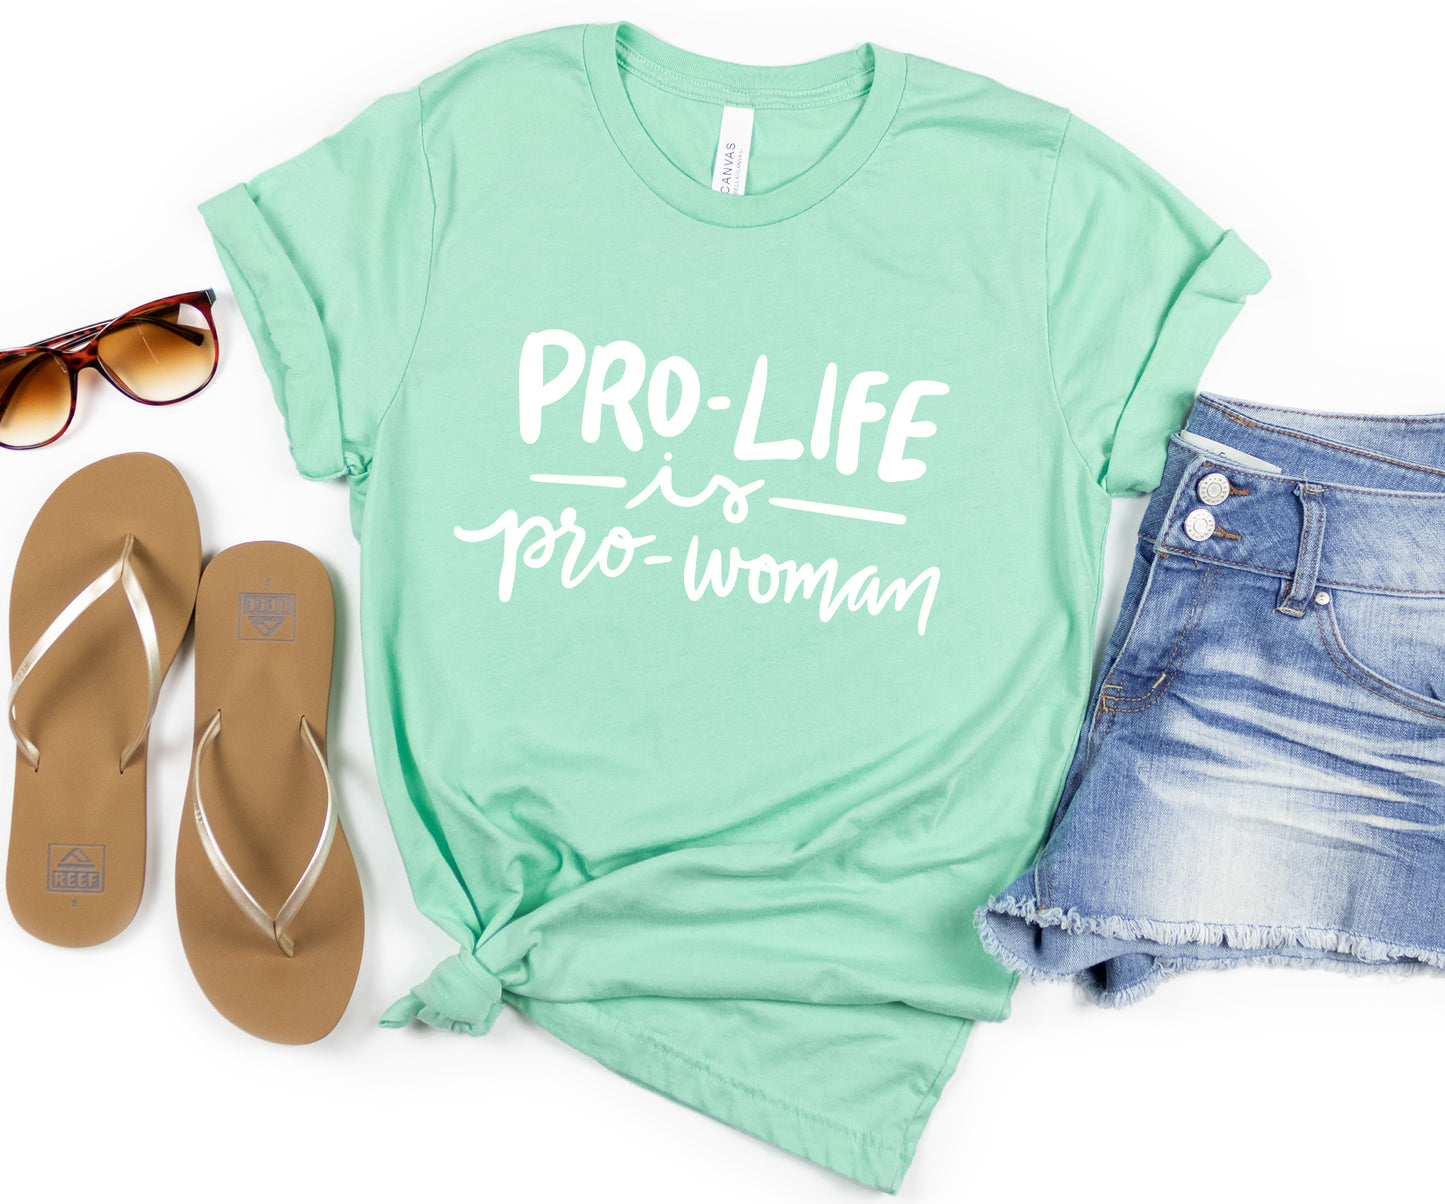 Pro-life is Pro-Woman | Pregnancy center Donation | T-shirt